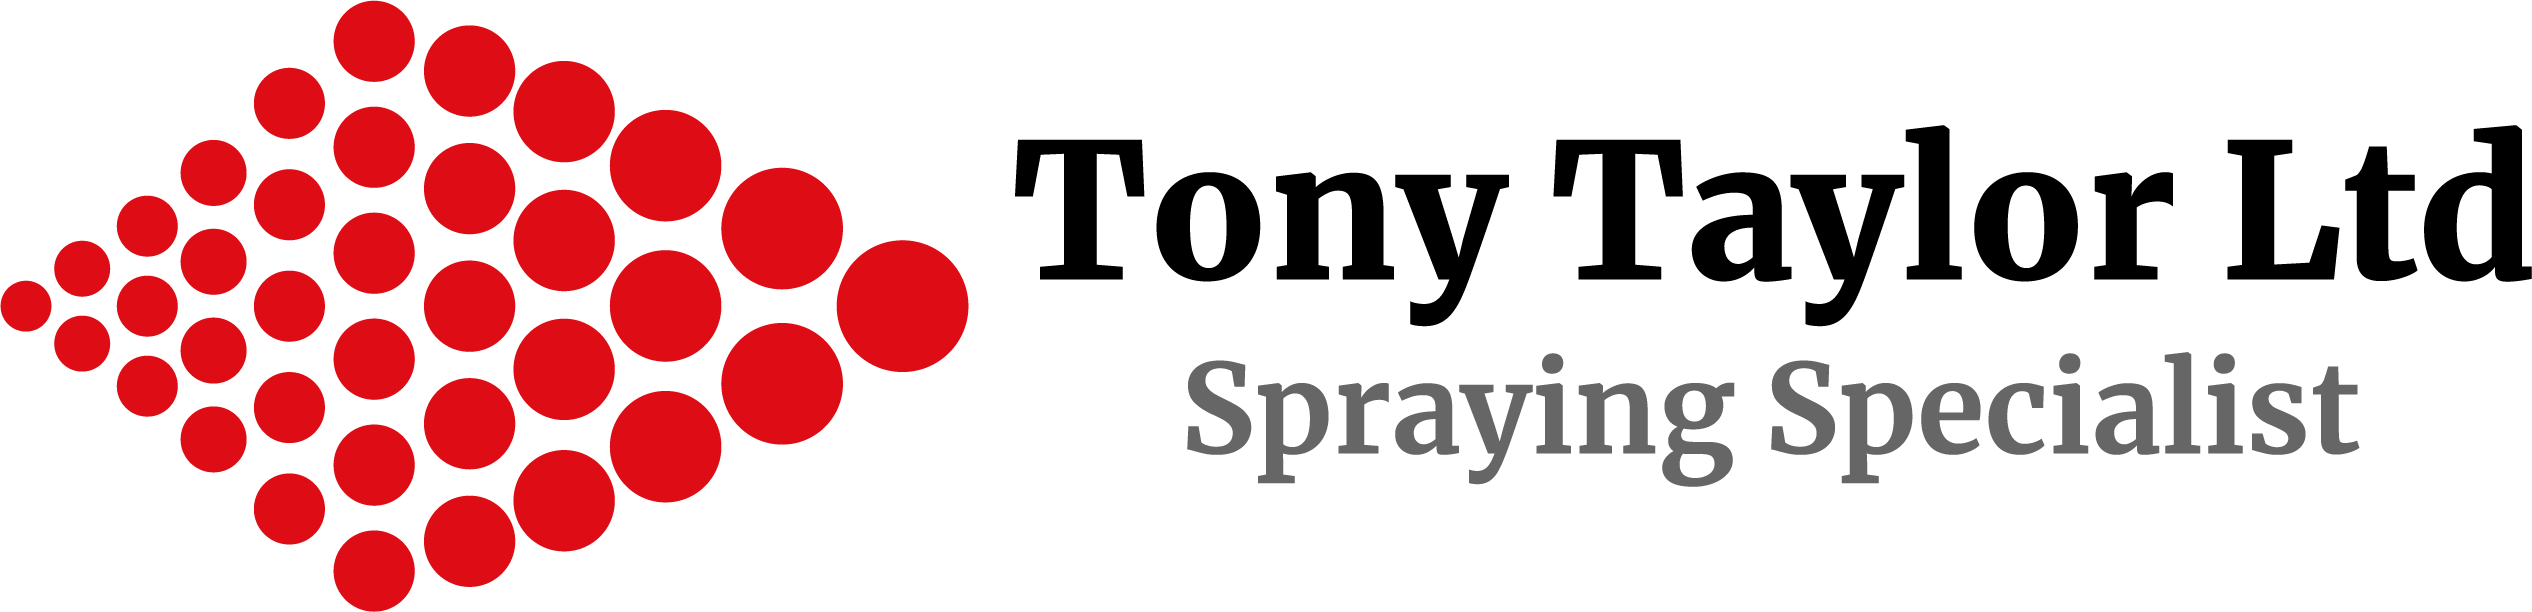 Tony Taylor Ltd